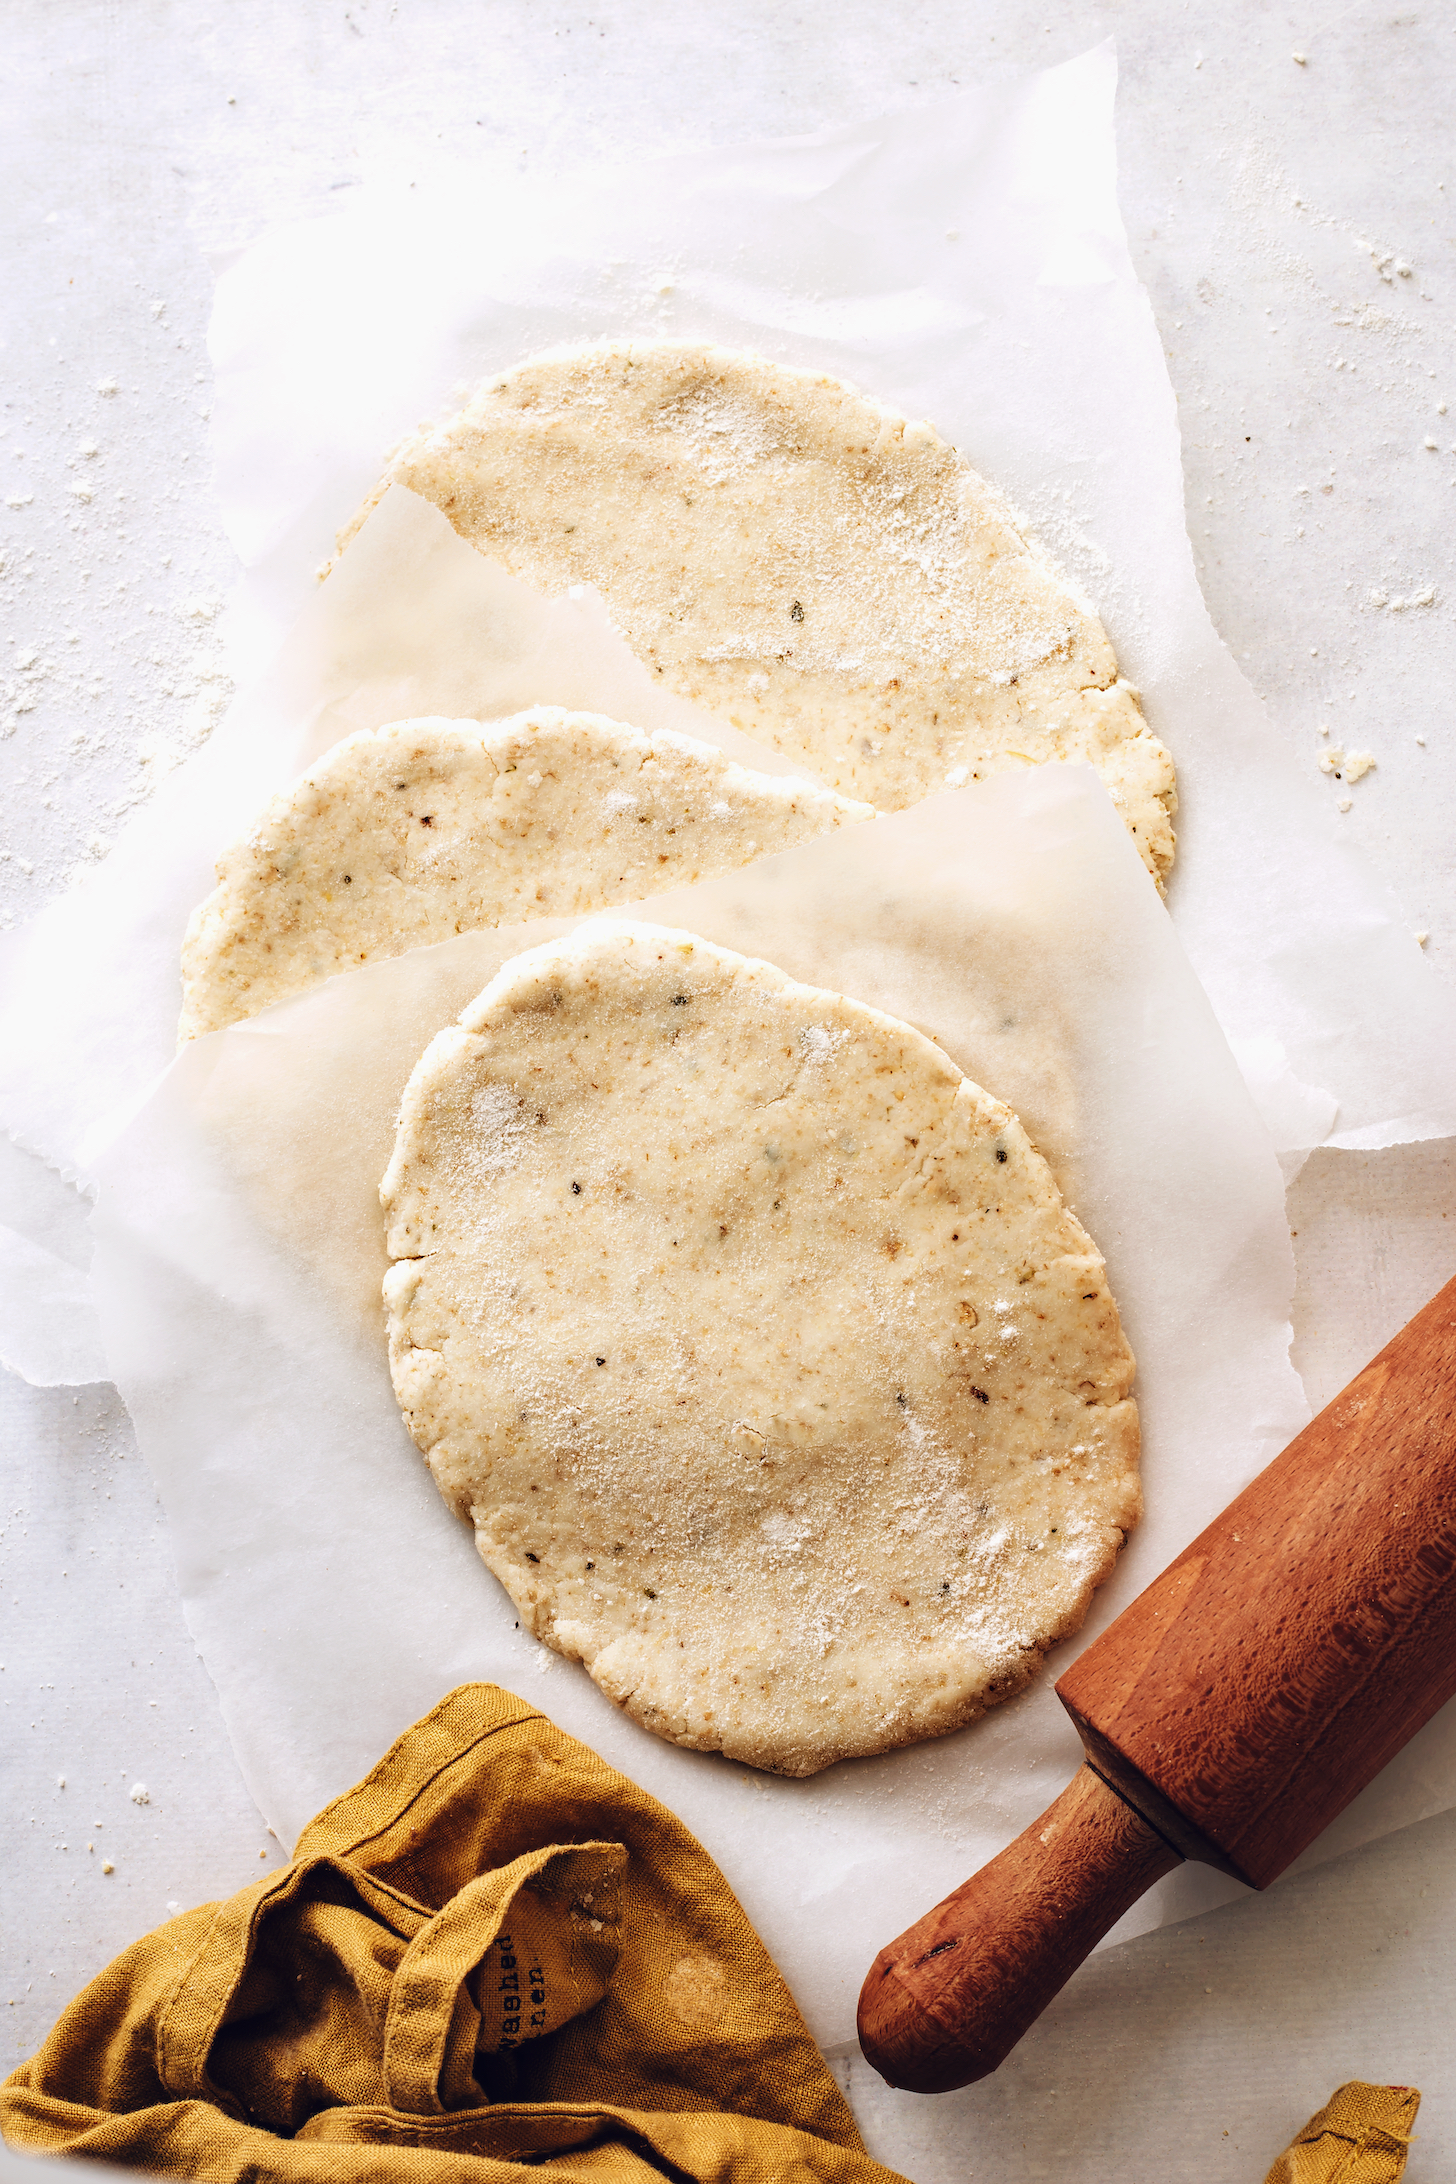 Gluten-free flatbread dough before cooking